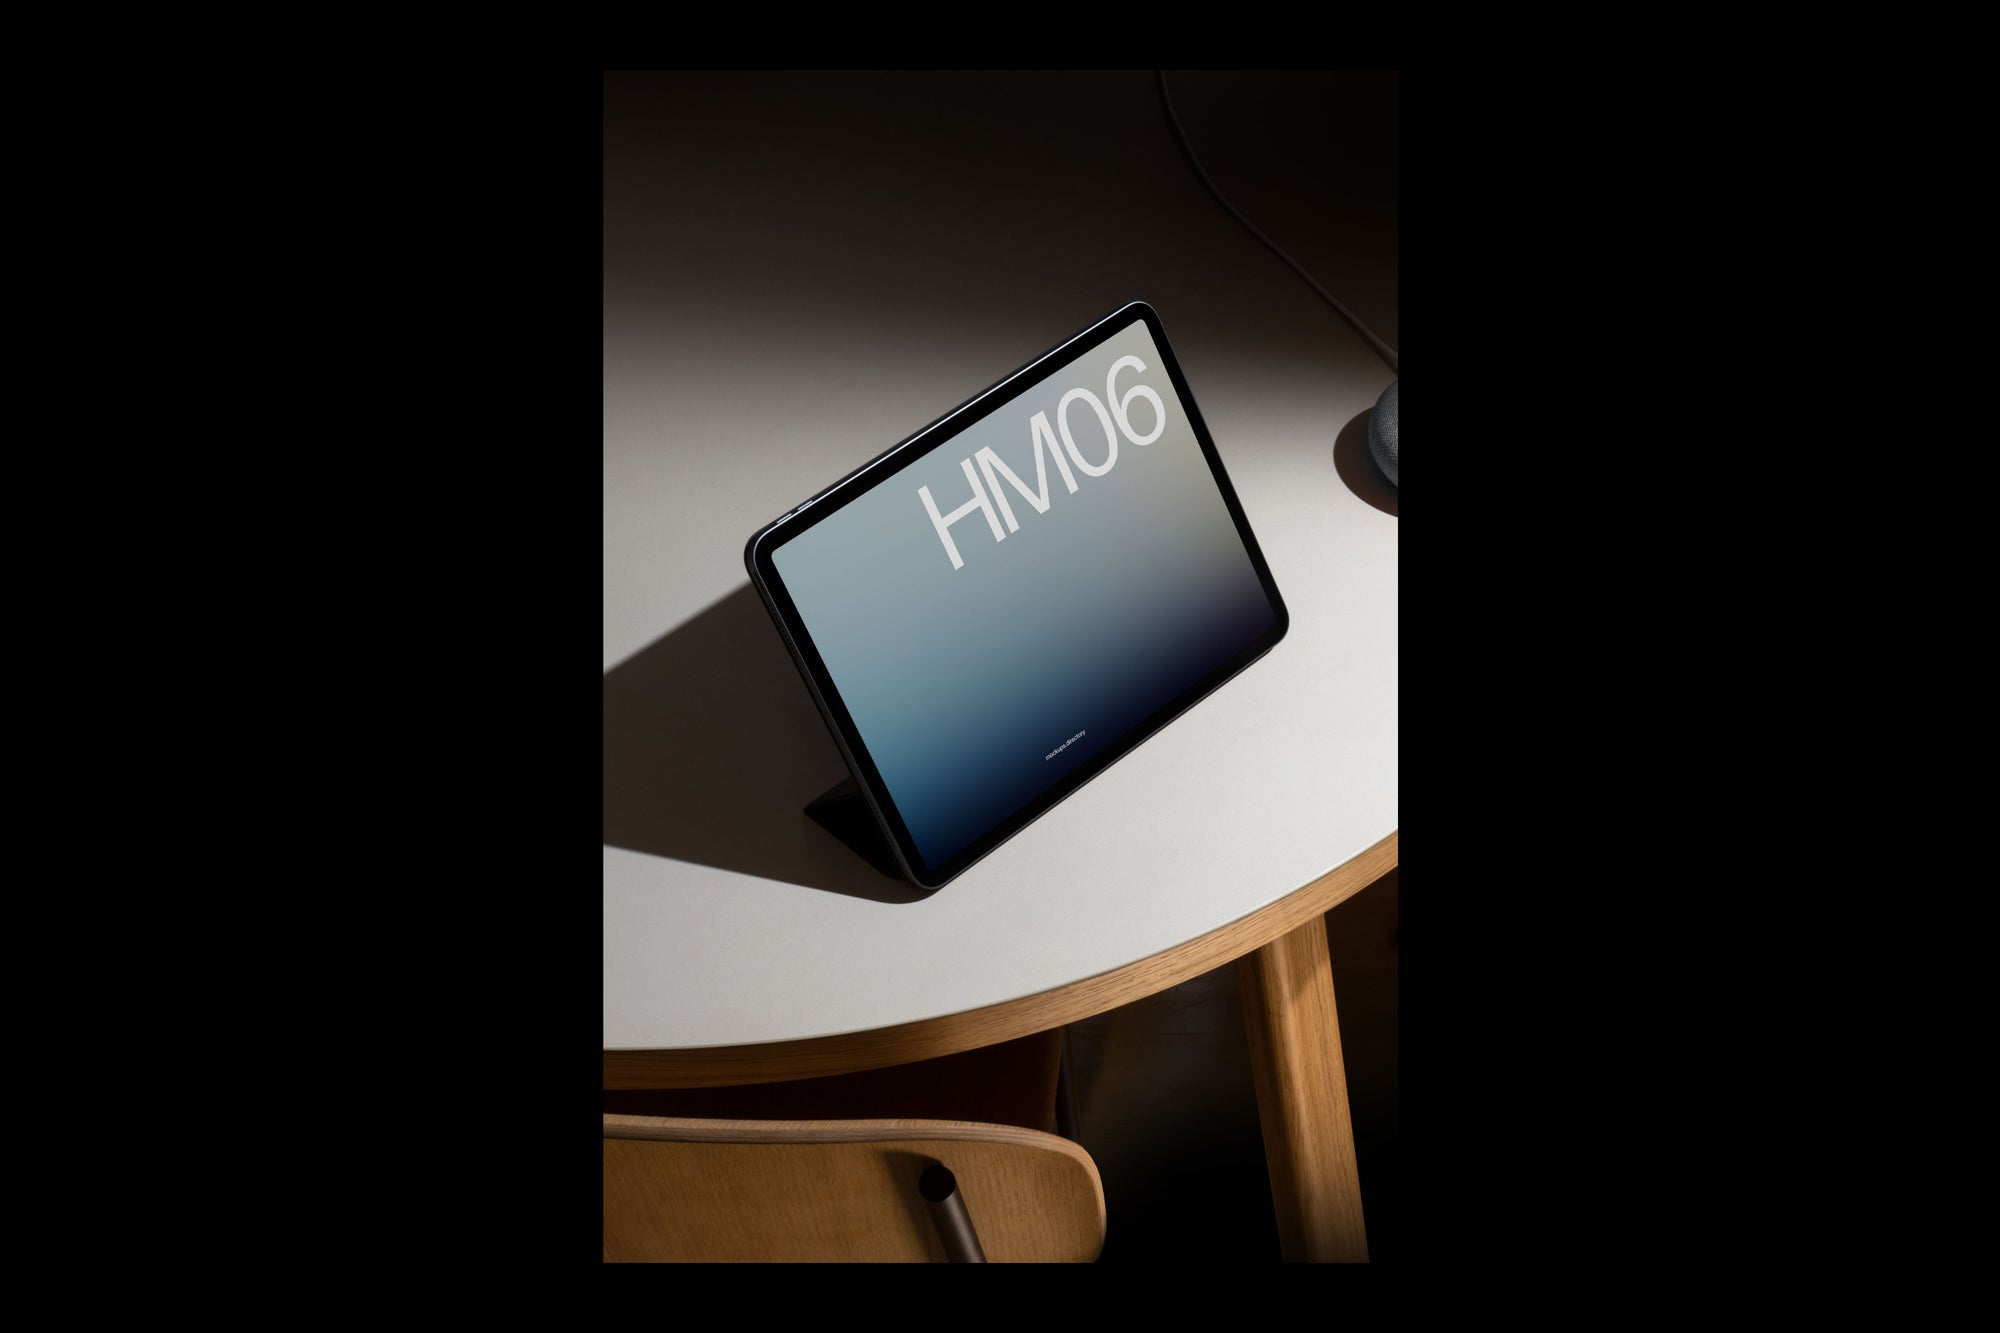 HM06 — iPad Pro